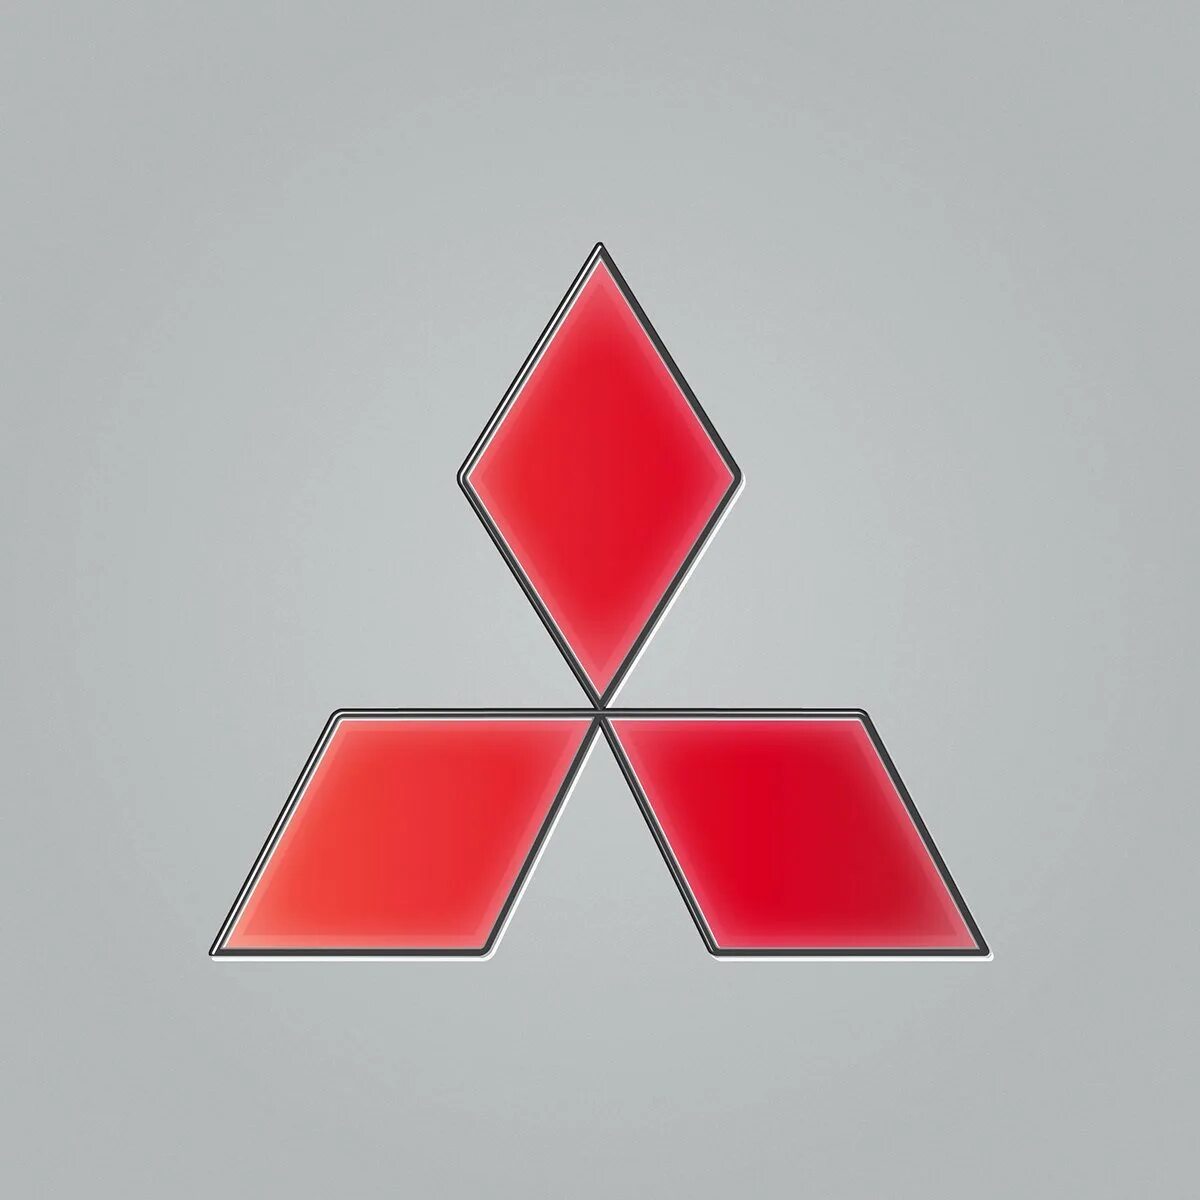 Логотип mitsubishi. Мицубиси лого. Митсубиши значок. Митсубиси Аутлендер значок. Mitsubishi символ.